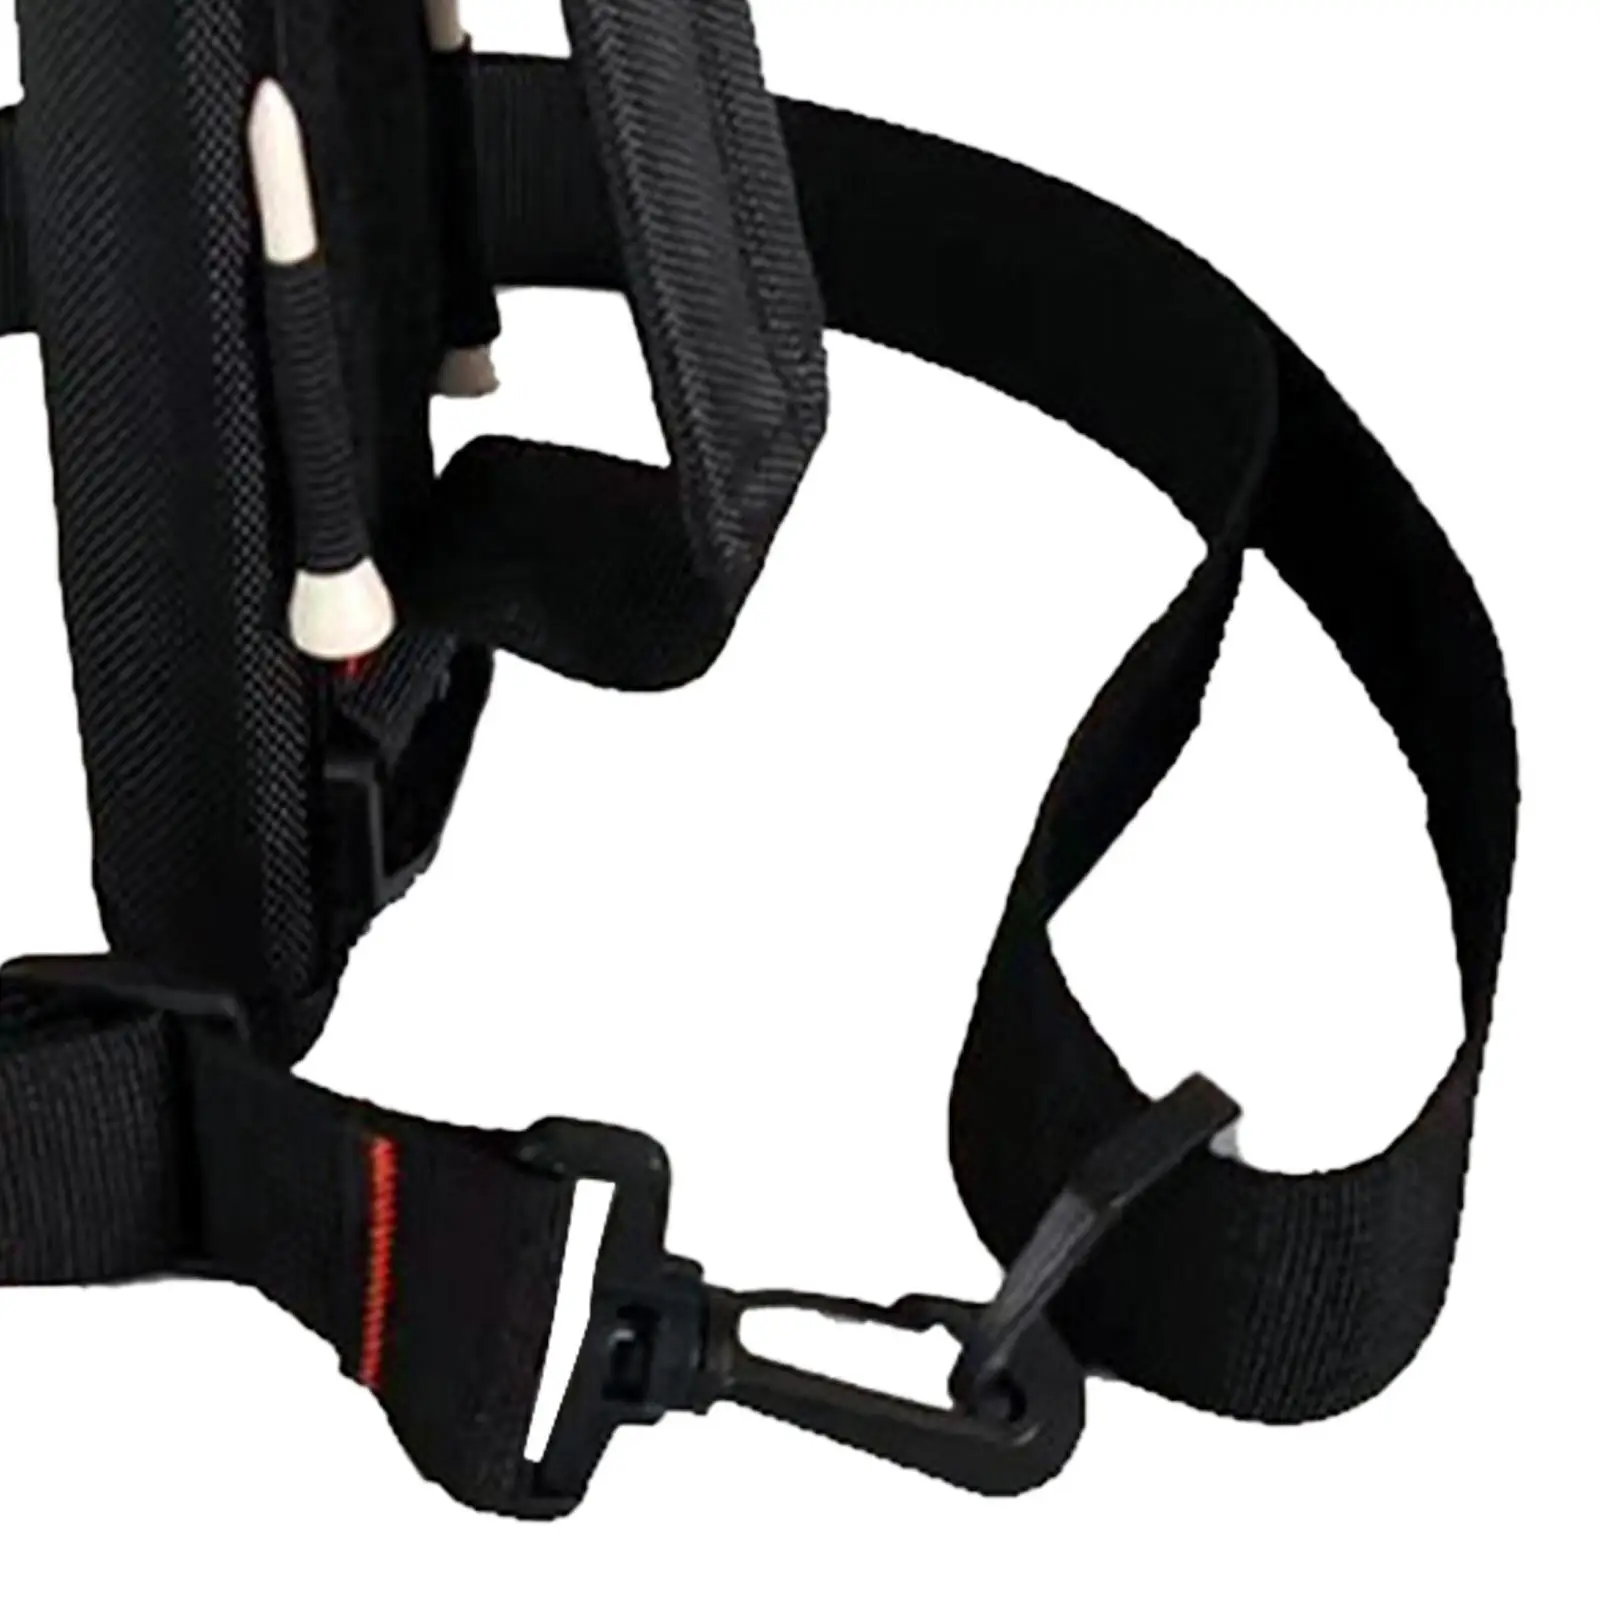 

Golf Club Bag Sunday Bag Carrier Bag Lightweight Driving Range Backpack Carry Bag Practice for Adults Kids Beginners